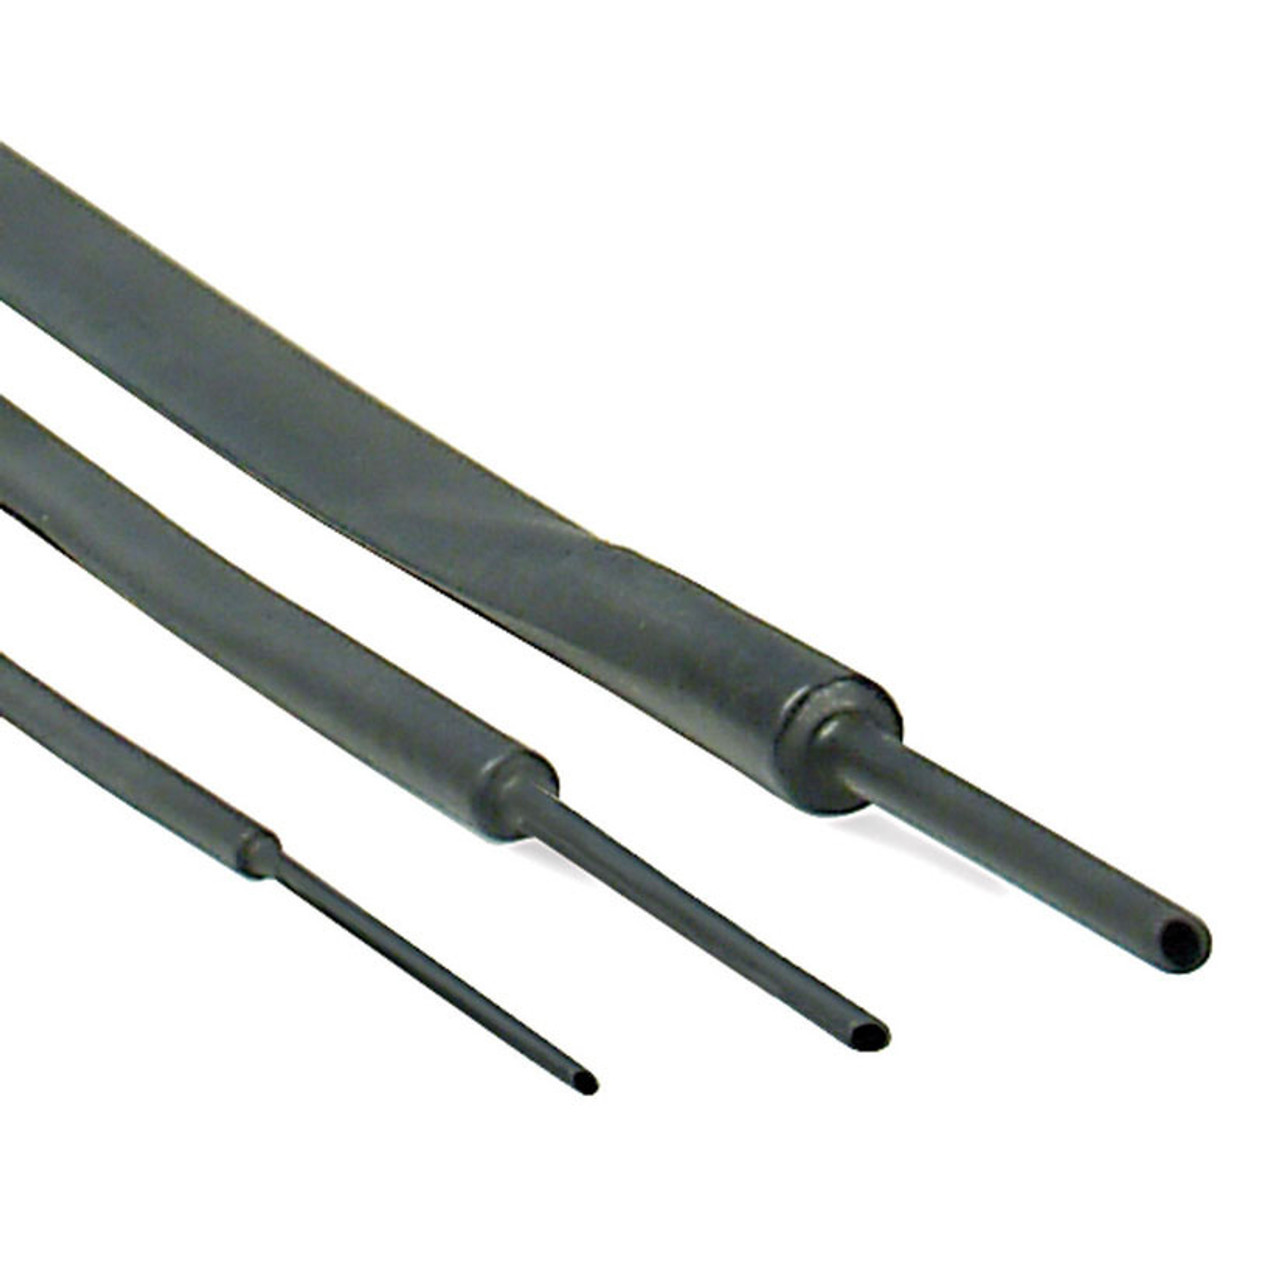 Design Engineering 10839 Shrink Sleeve Tubing, 3 / 6 / 9 mm ID, 4 ft, Black, Kit